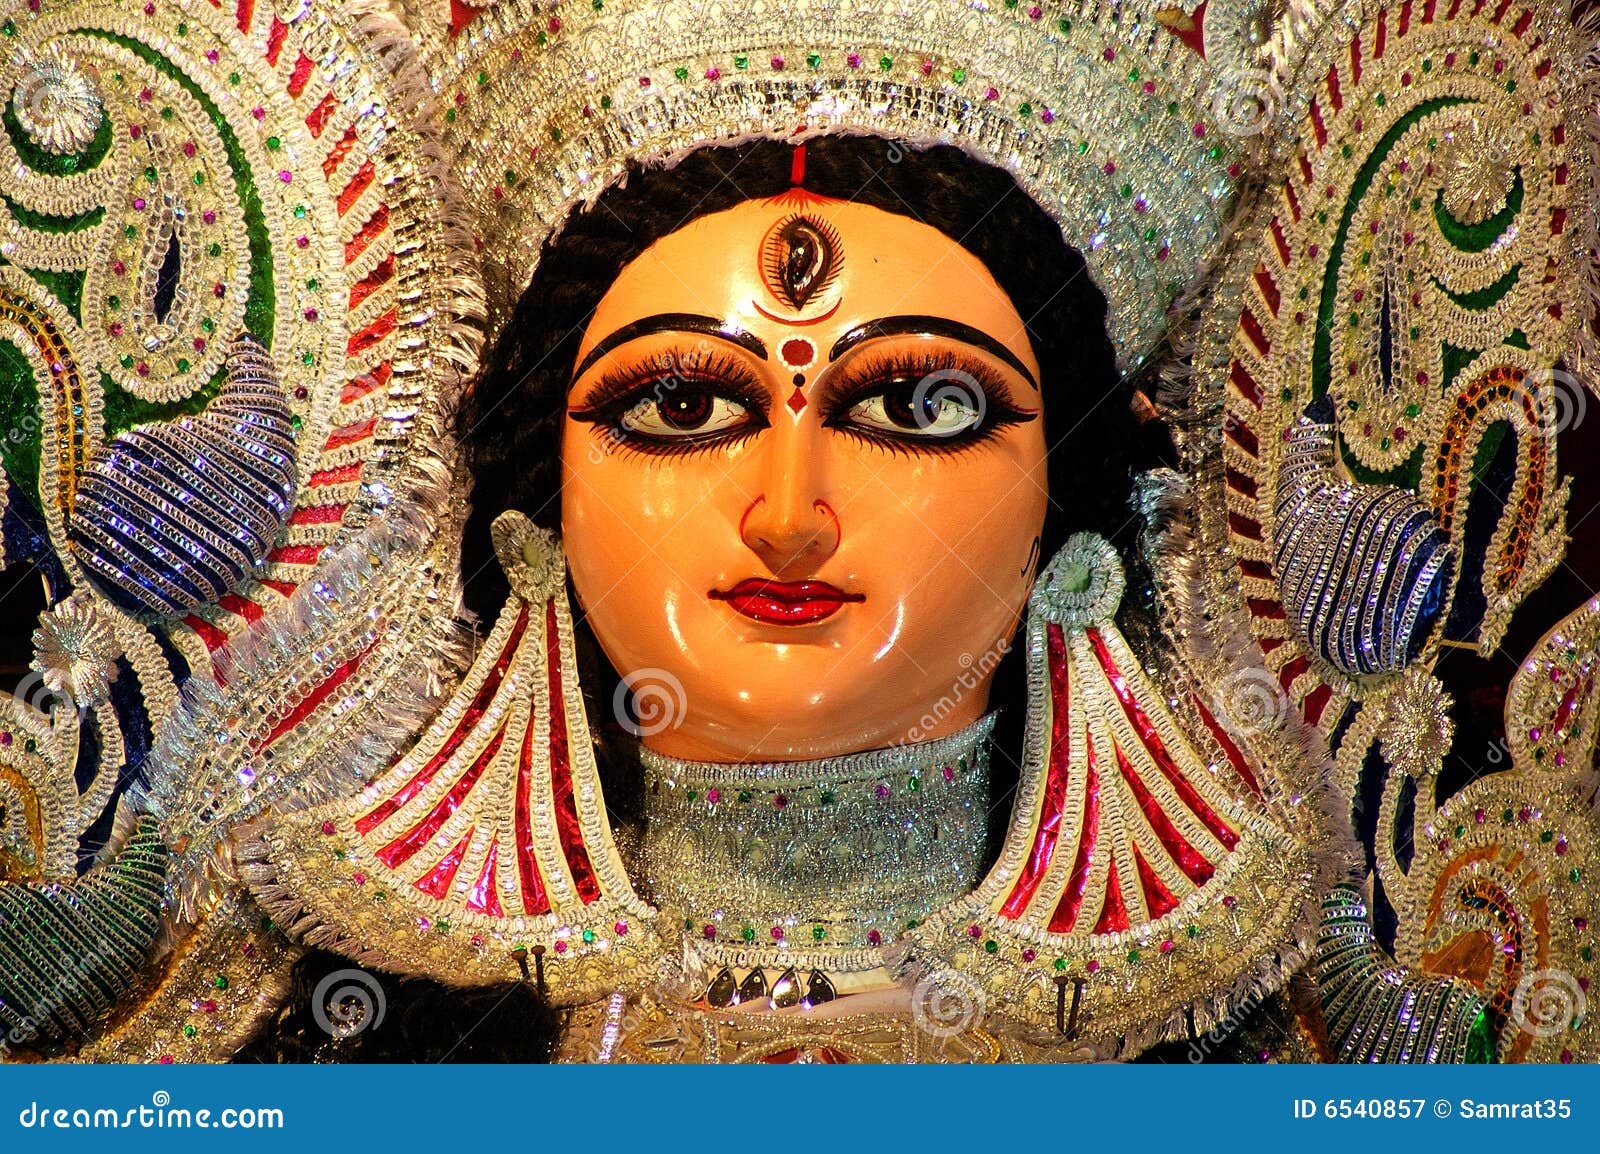 a close up of a durga idol.